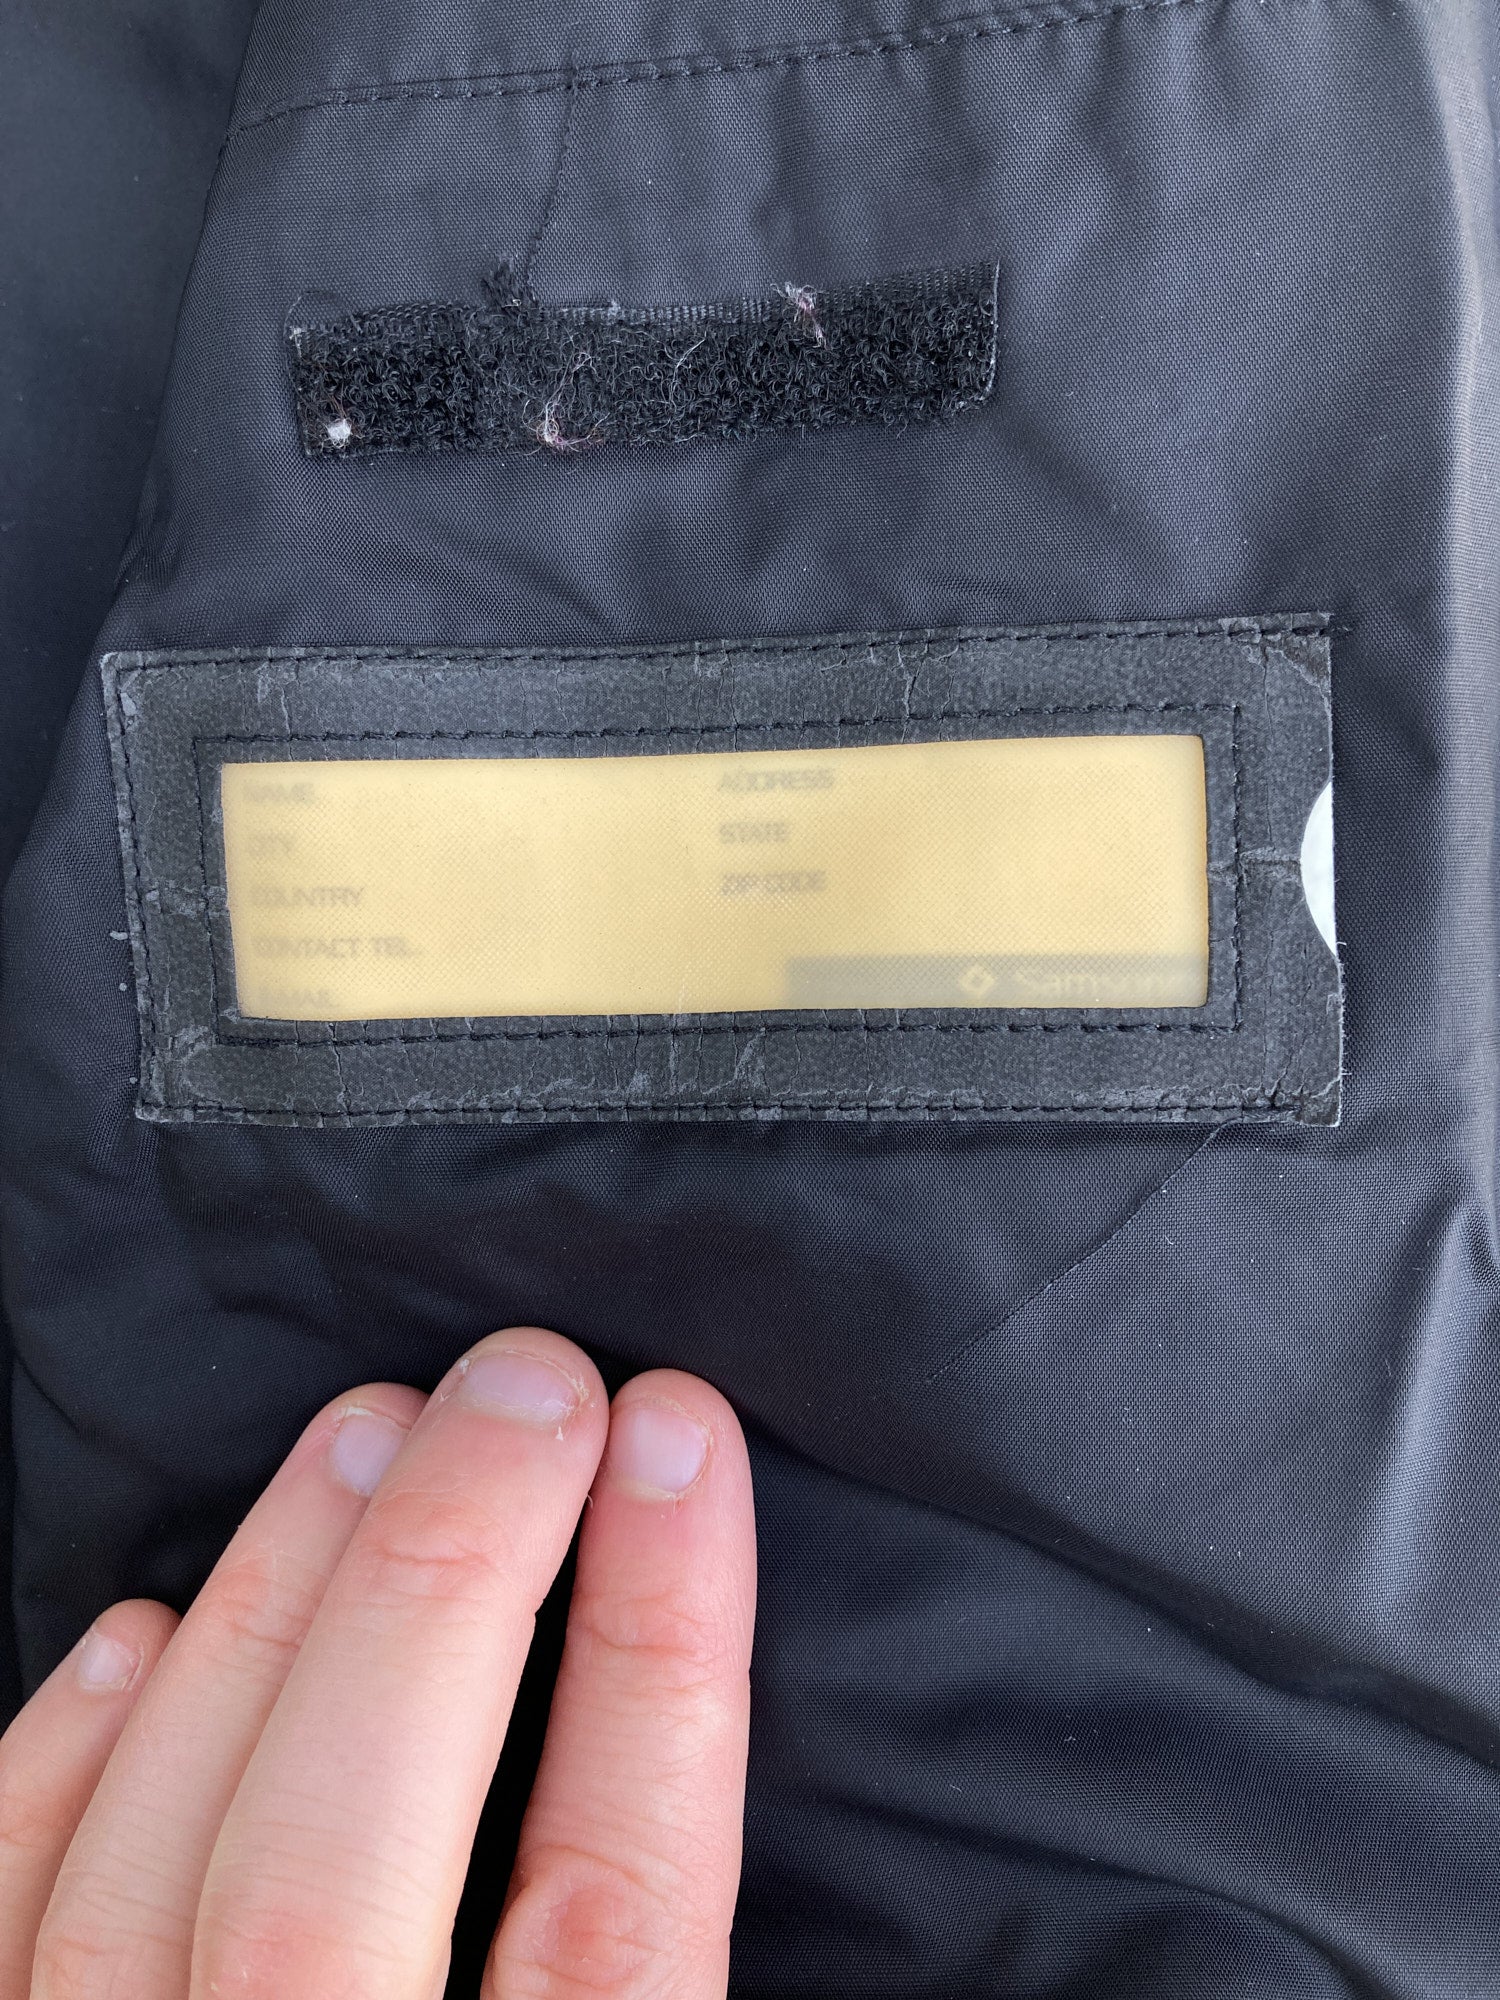 Samsonite grey poly blend padded compass sleeve bomber jacket - size 50